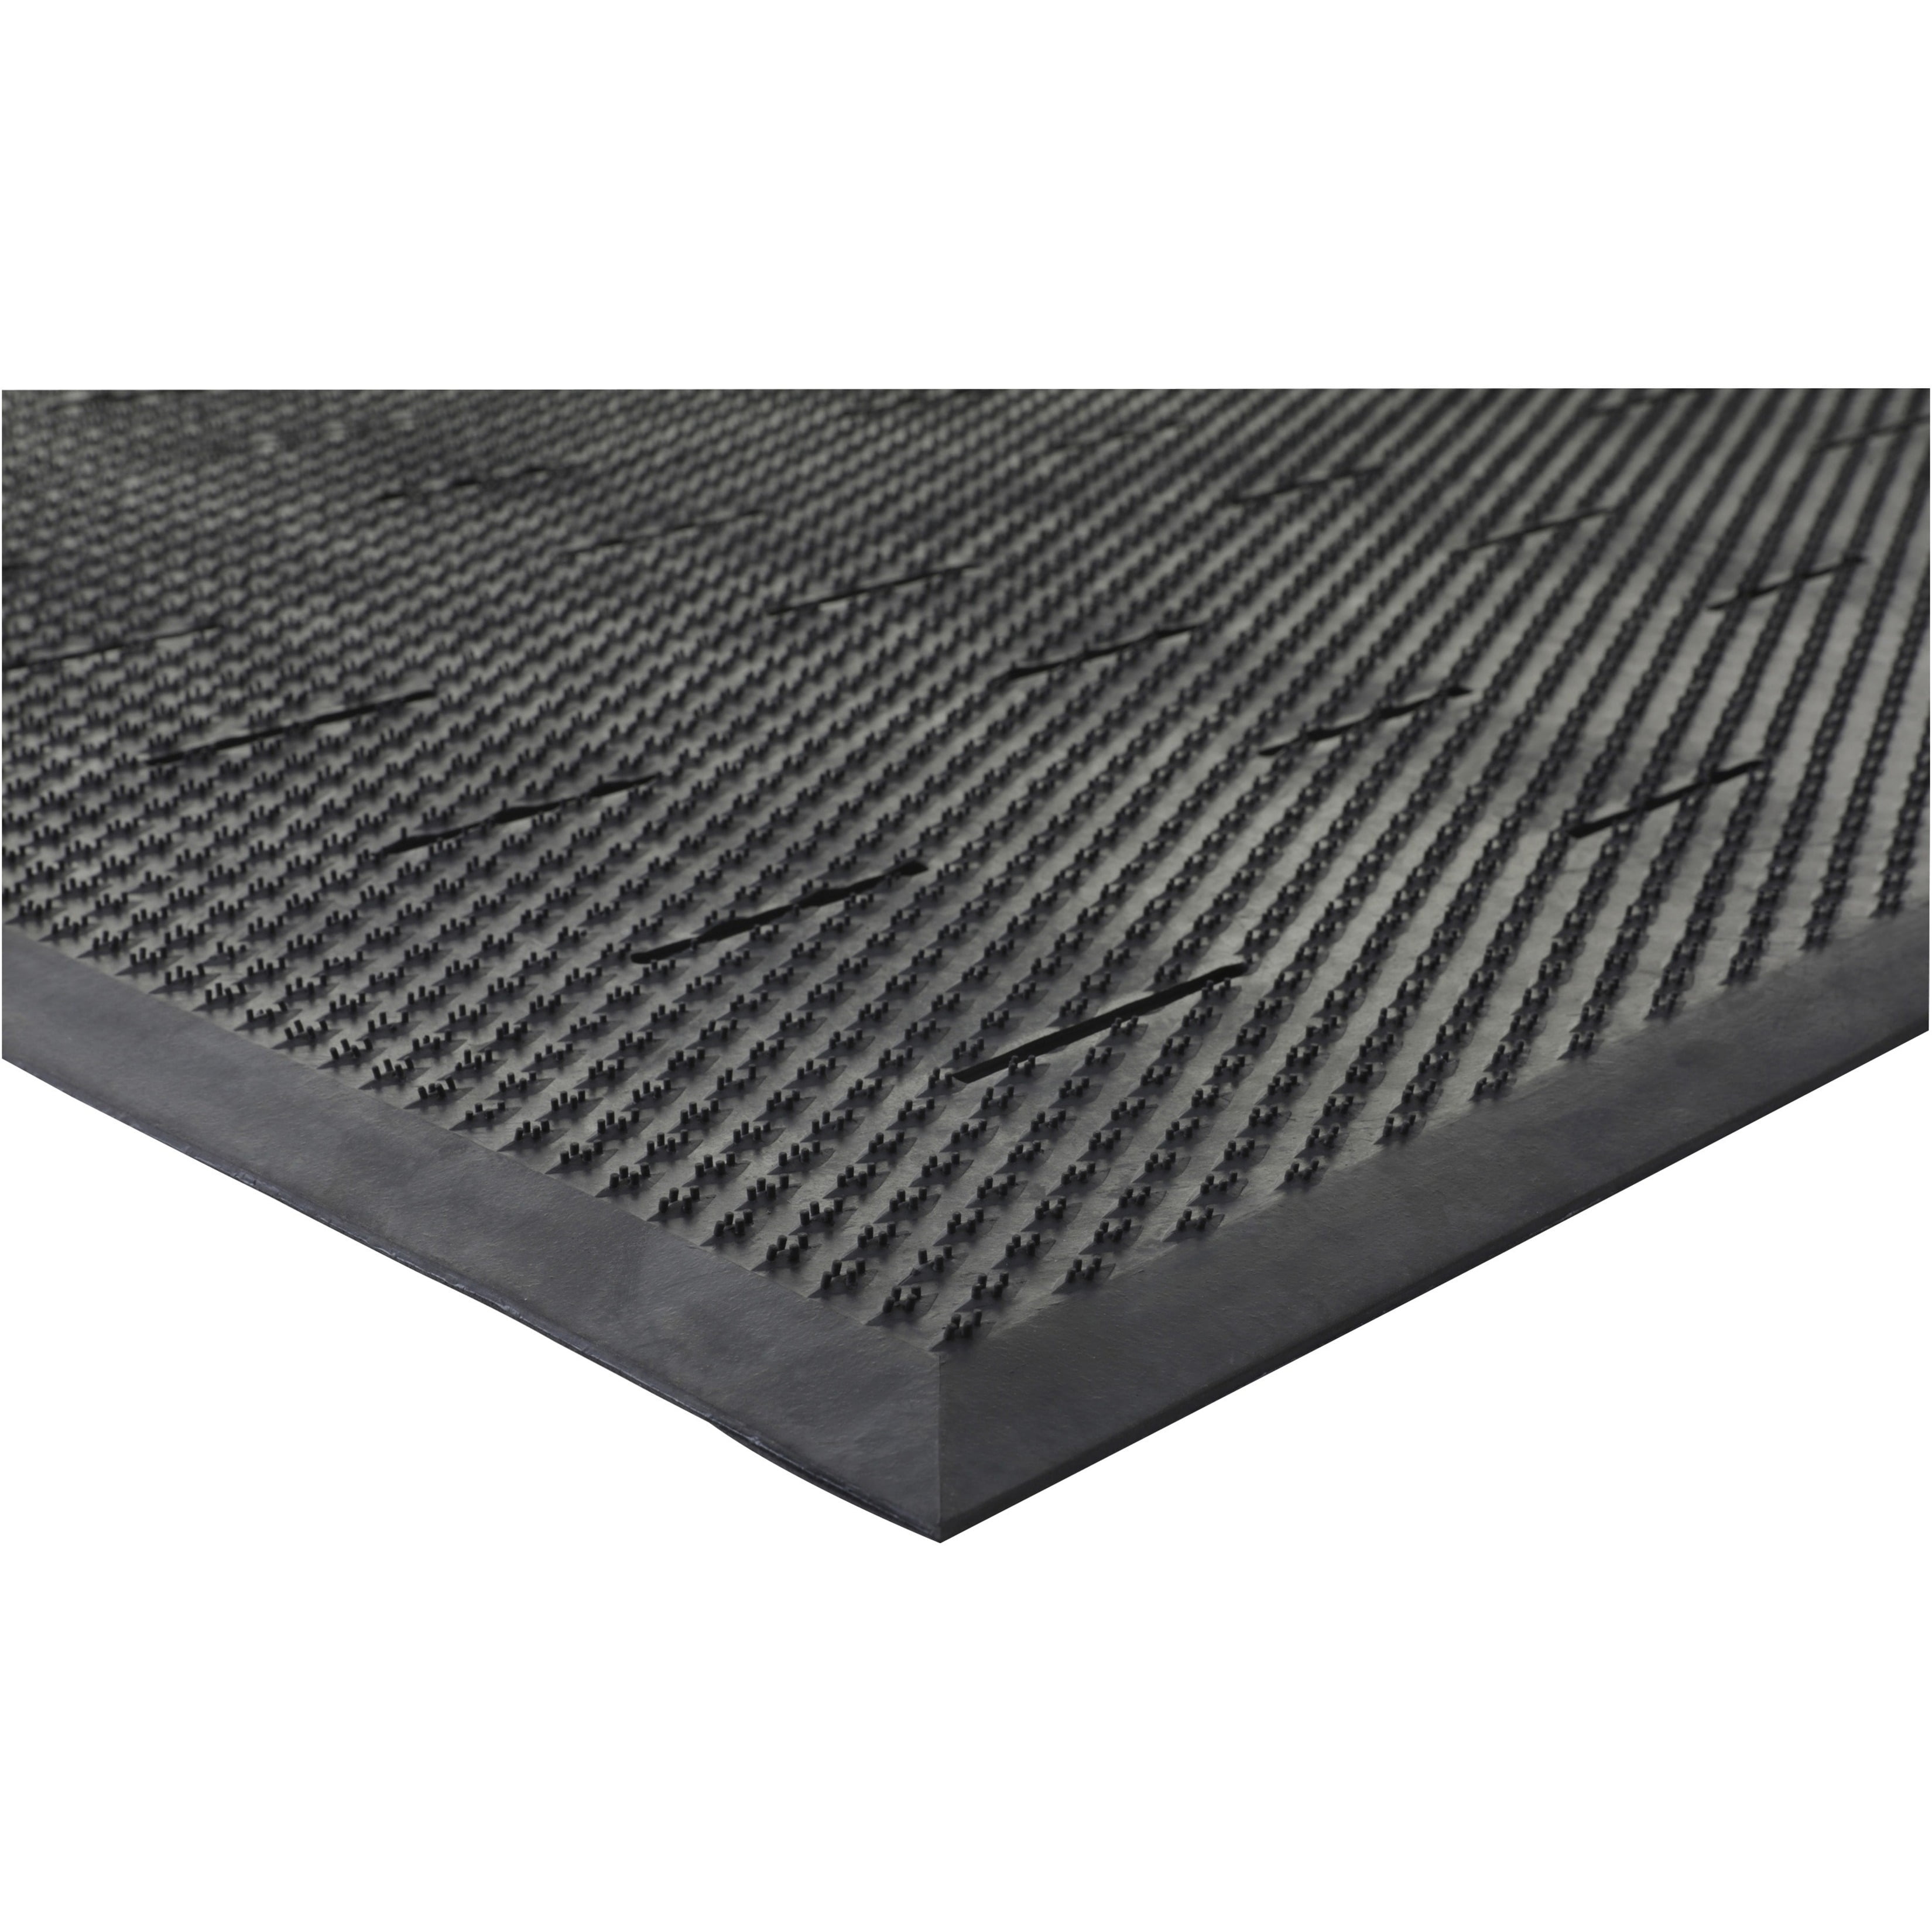 Genuine Joe Anti-Fatigue Floor Mat Beveled Edge 2'x3' Black/Yellow 70363 